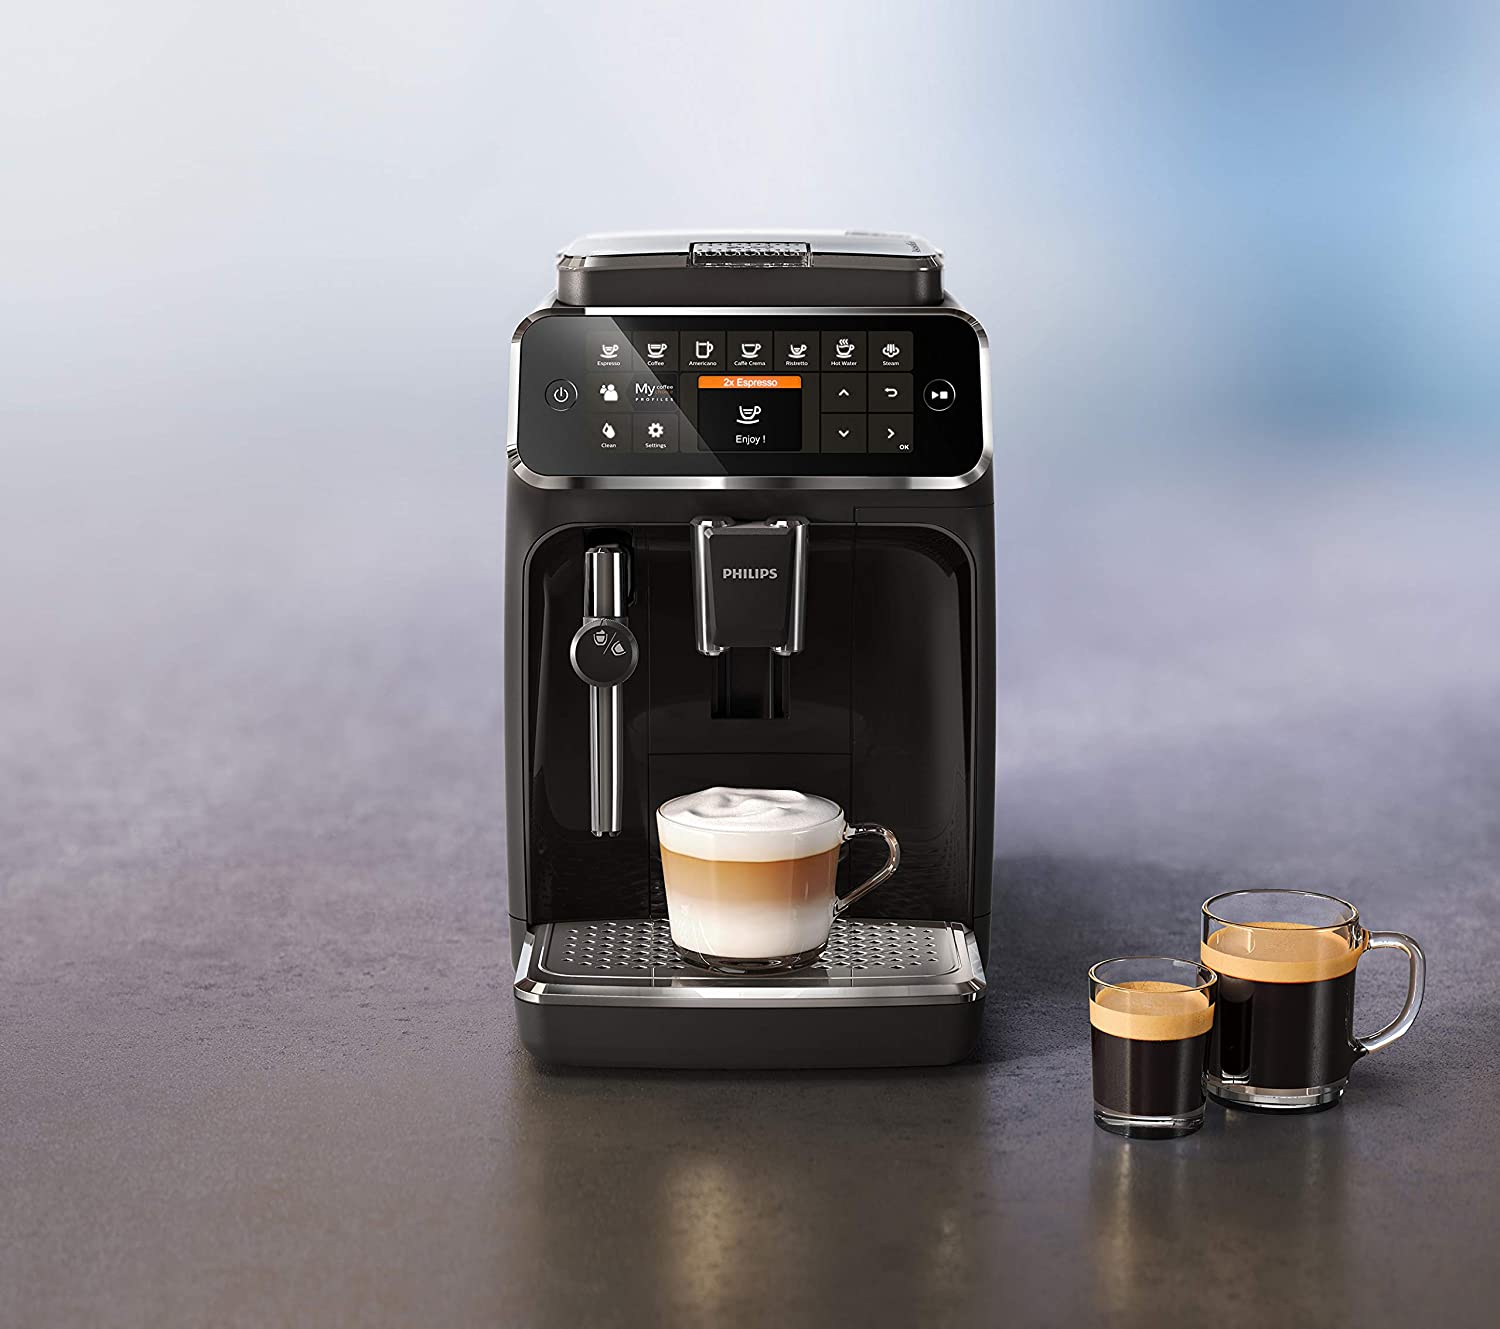 PHILIPS Kitchen Appliances EP4321/54 Espresso Machine, One Size, Black